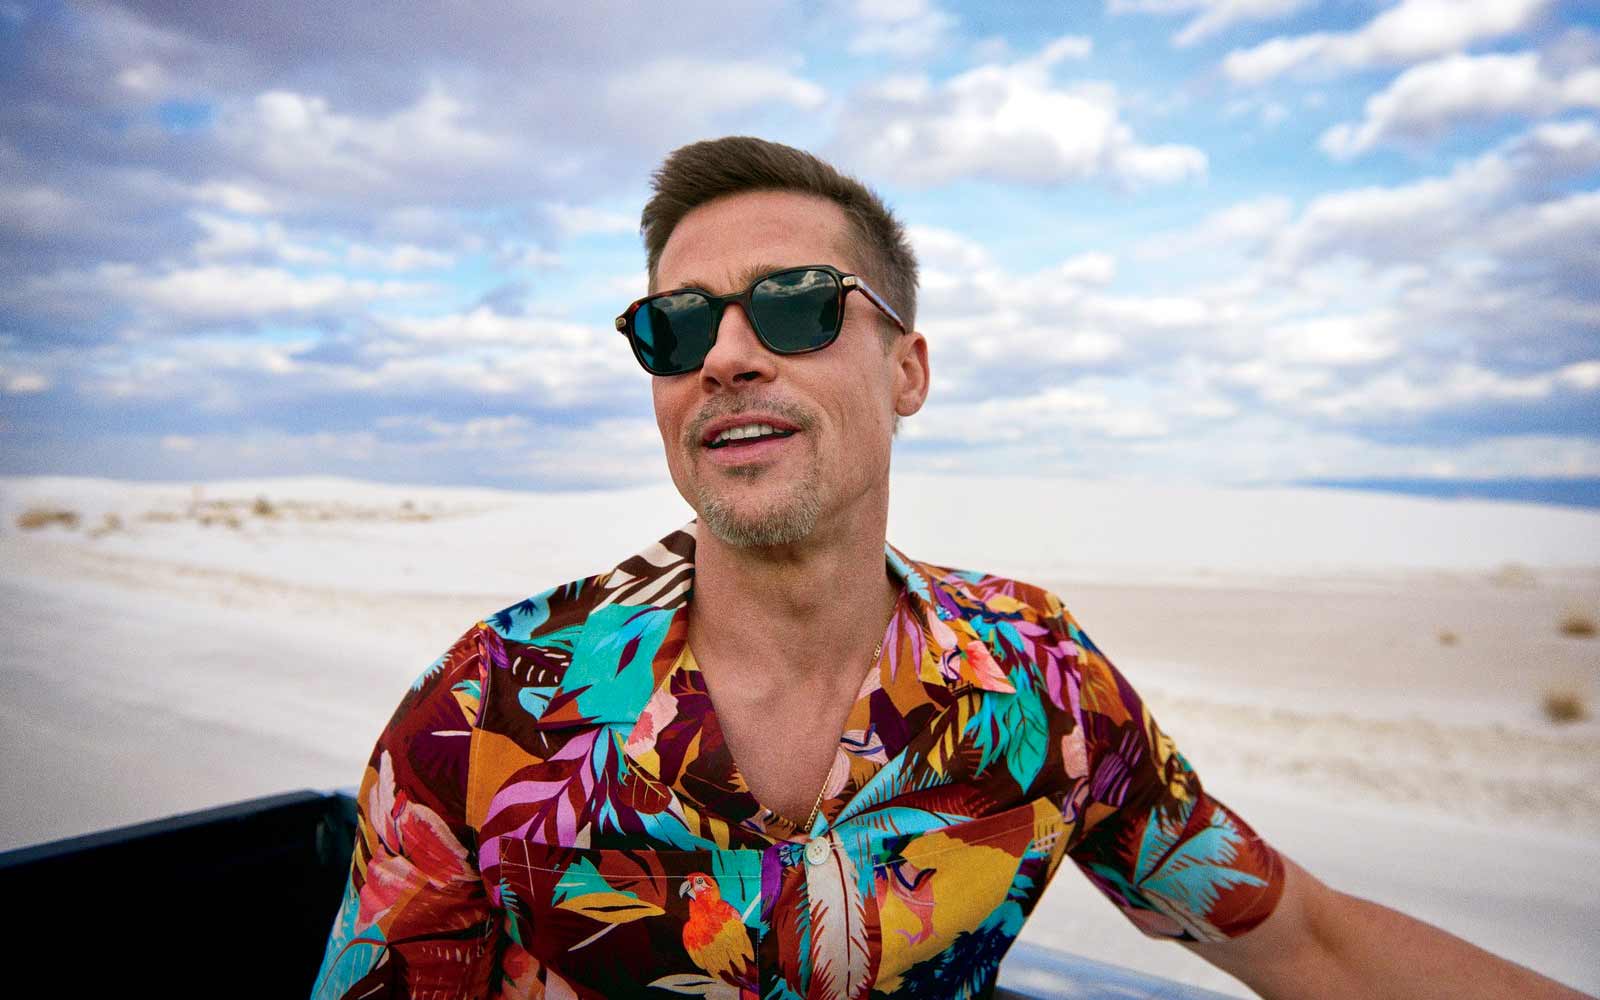 man wearing colorful print shirt in the desert